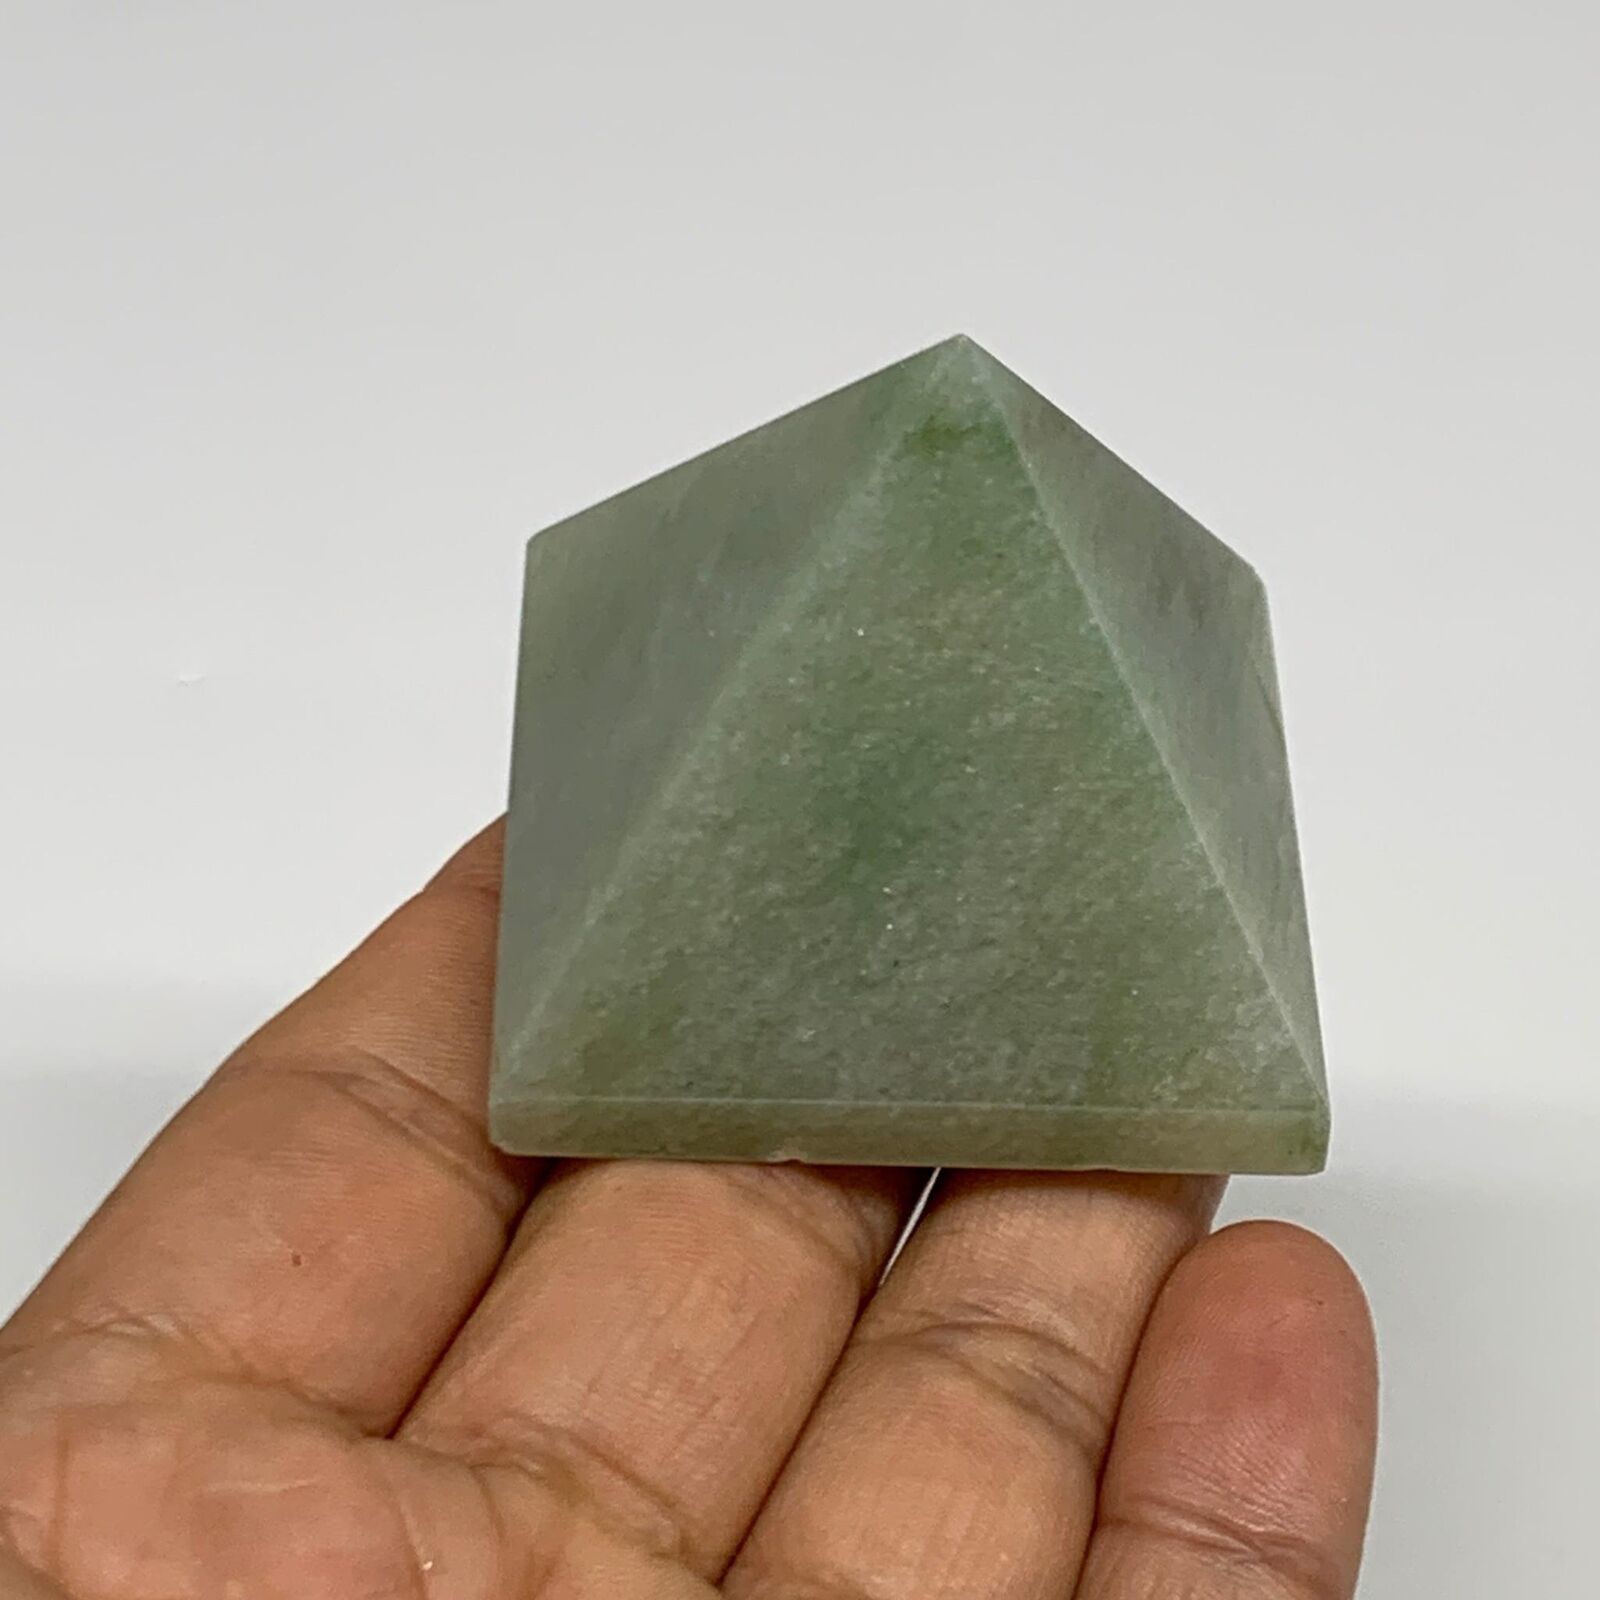 Primary image for 96.5g, 1.6"x1.8"x1.8", Green Aventurine Pyramid Gemstone,Healing Crystal, B30189